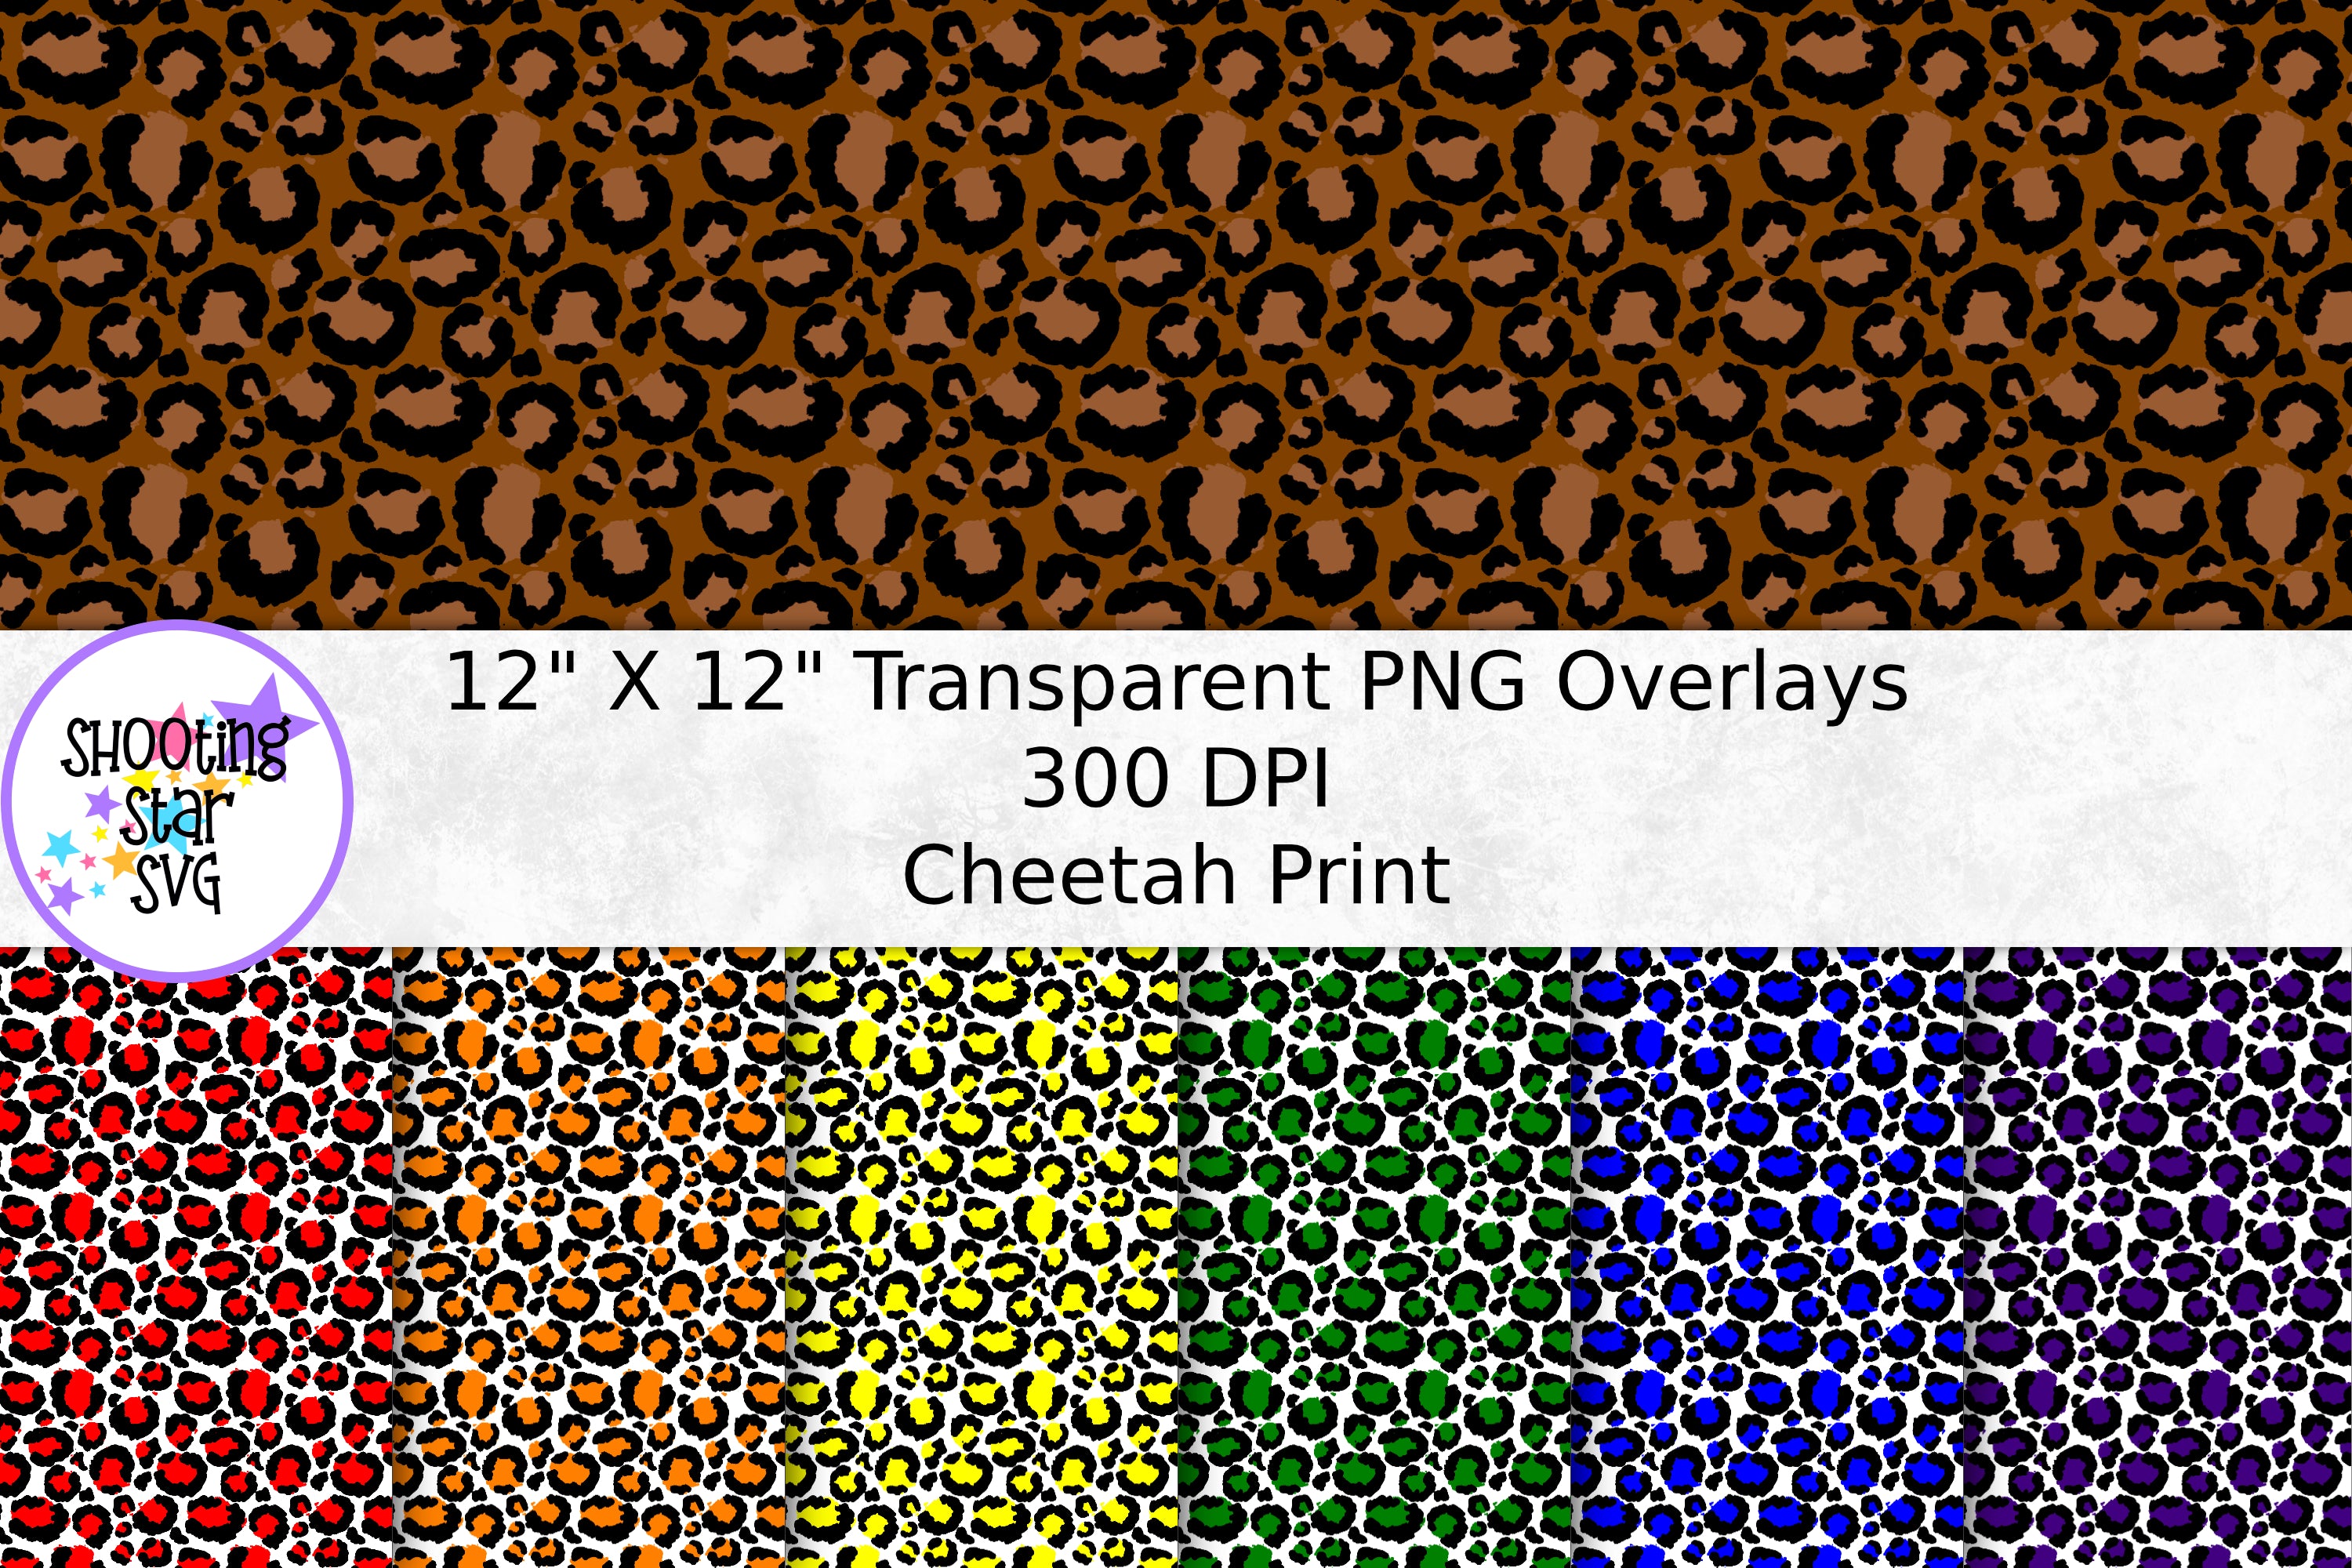 Color Cheetah Print Paper Overlay - Seamless